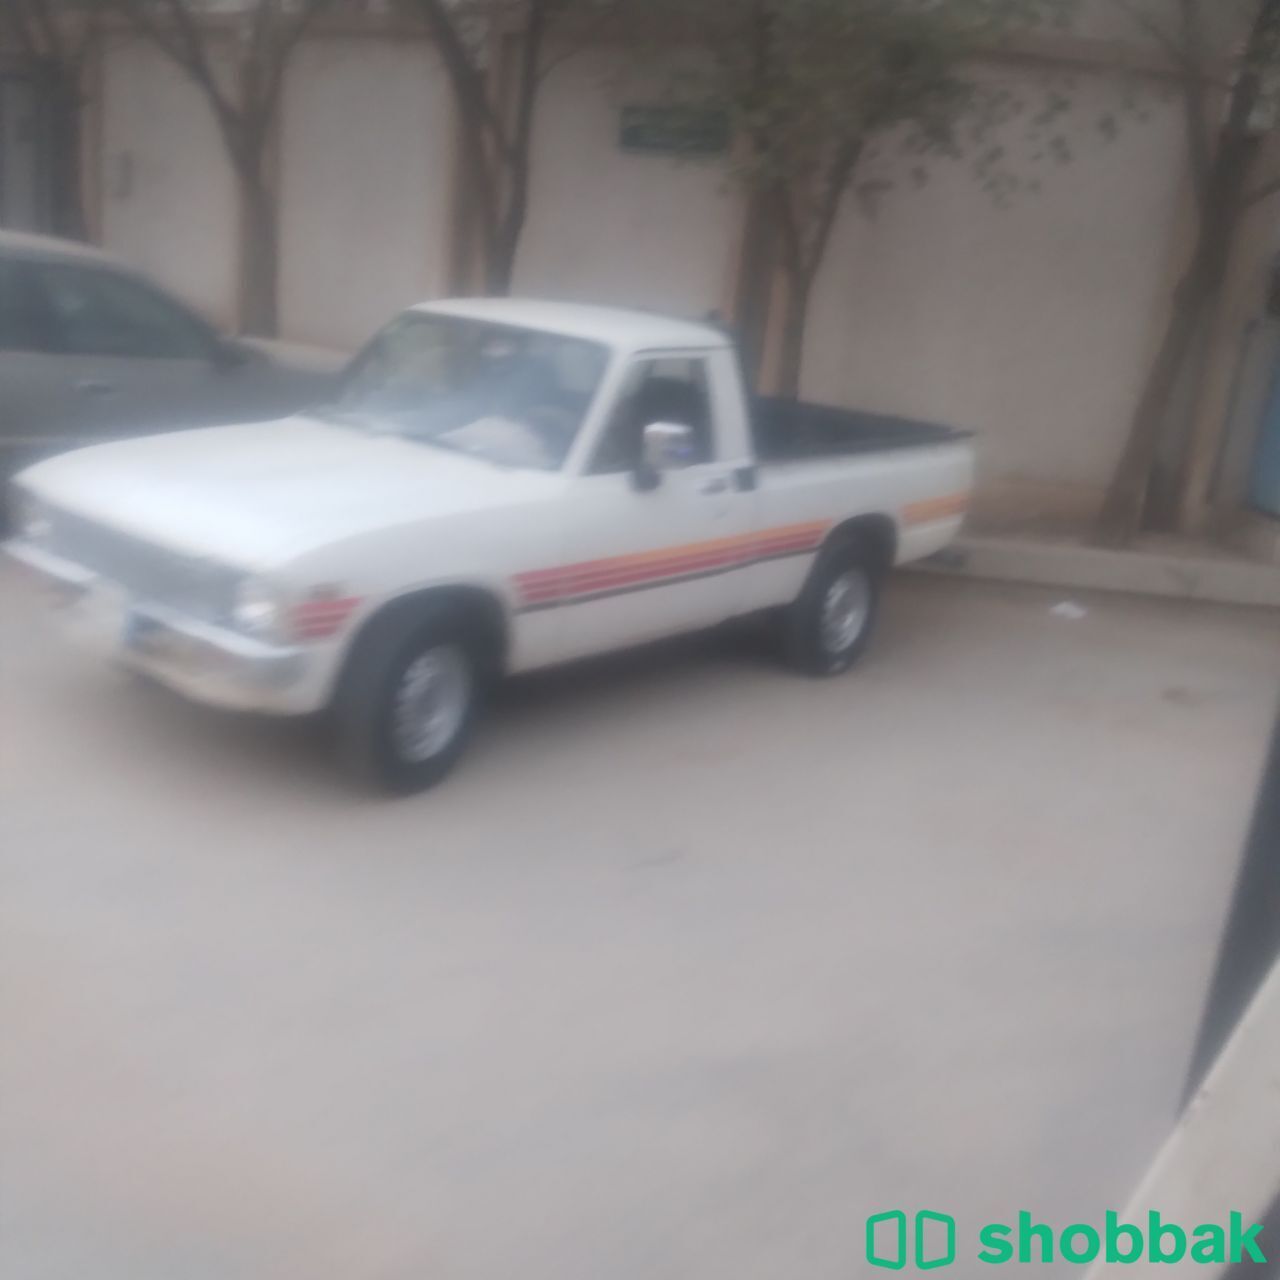 طش اثاث مستعمل بالرياض ٠٥٠٤٨٠٢٨٩٥ Shobbak Saudi Arabia